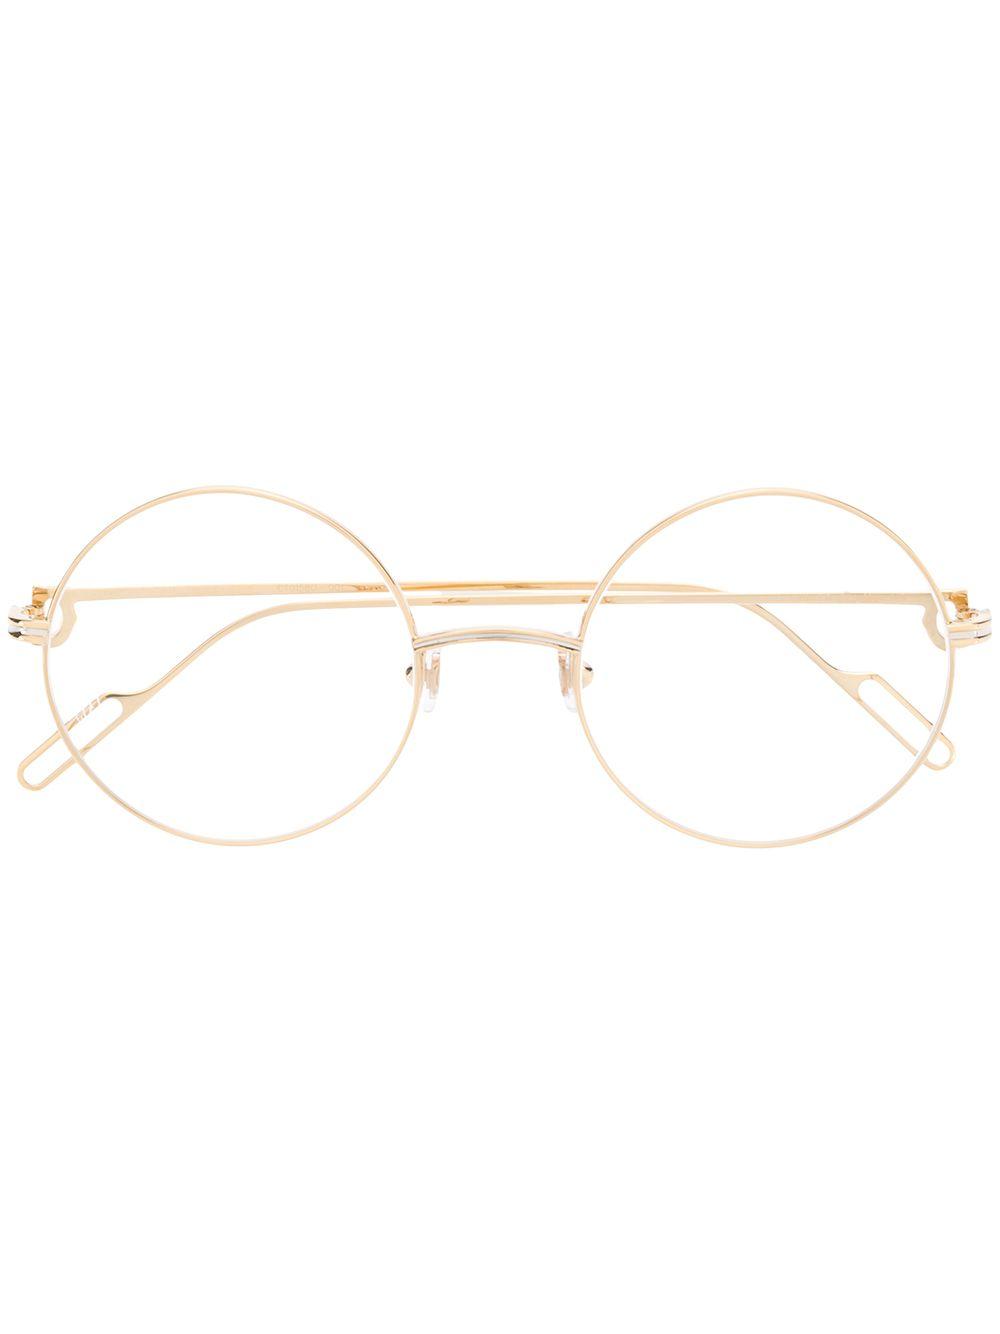 Cartier Round Frame Glasses in Metallic | Lyst